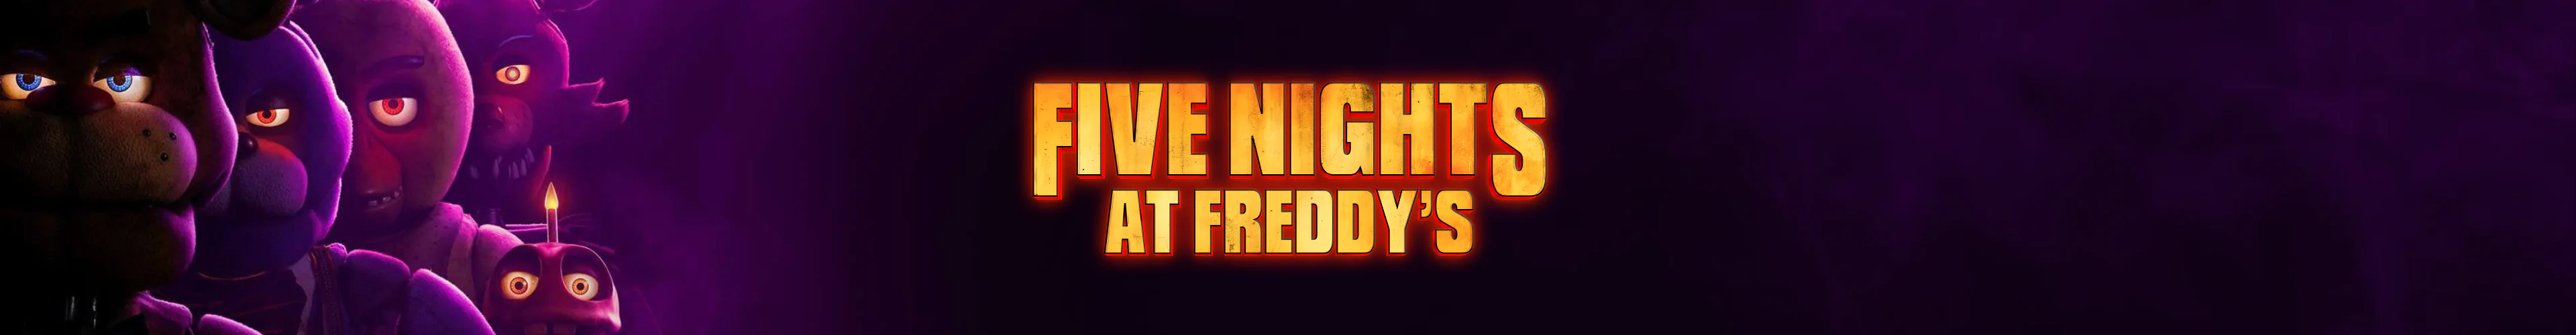 Five Nights at Freddy's figuren banner